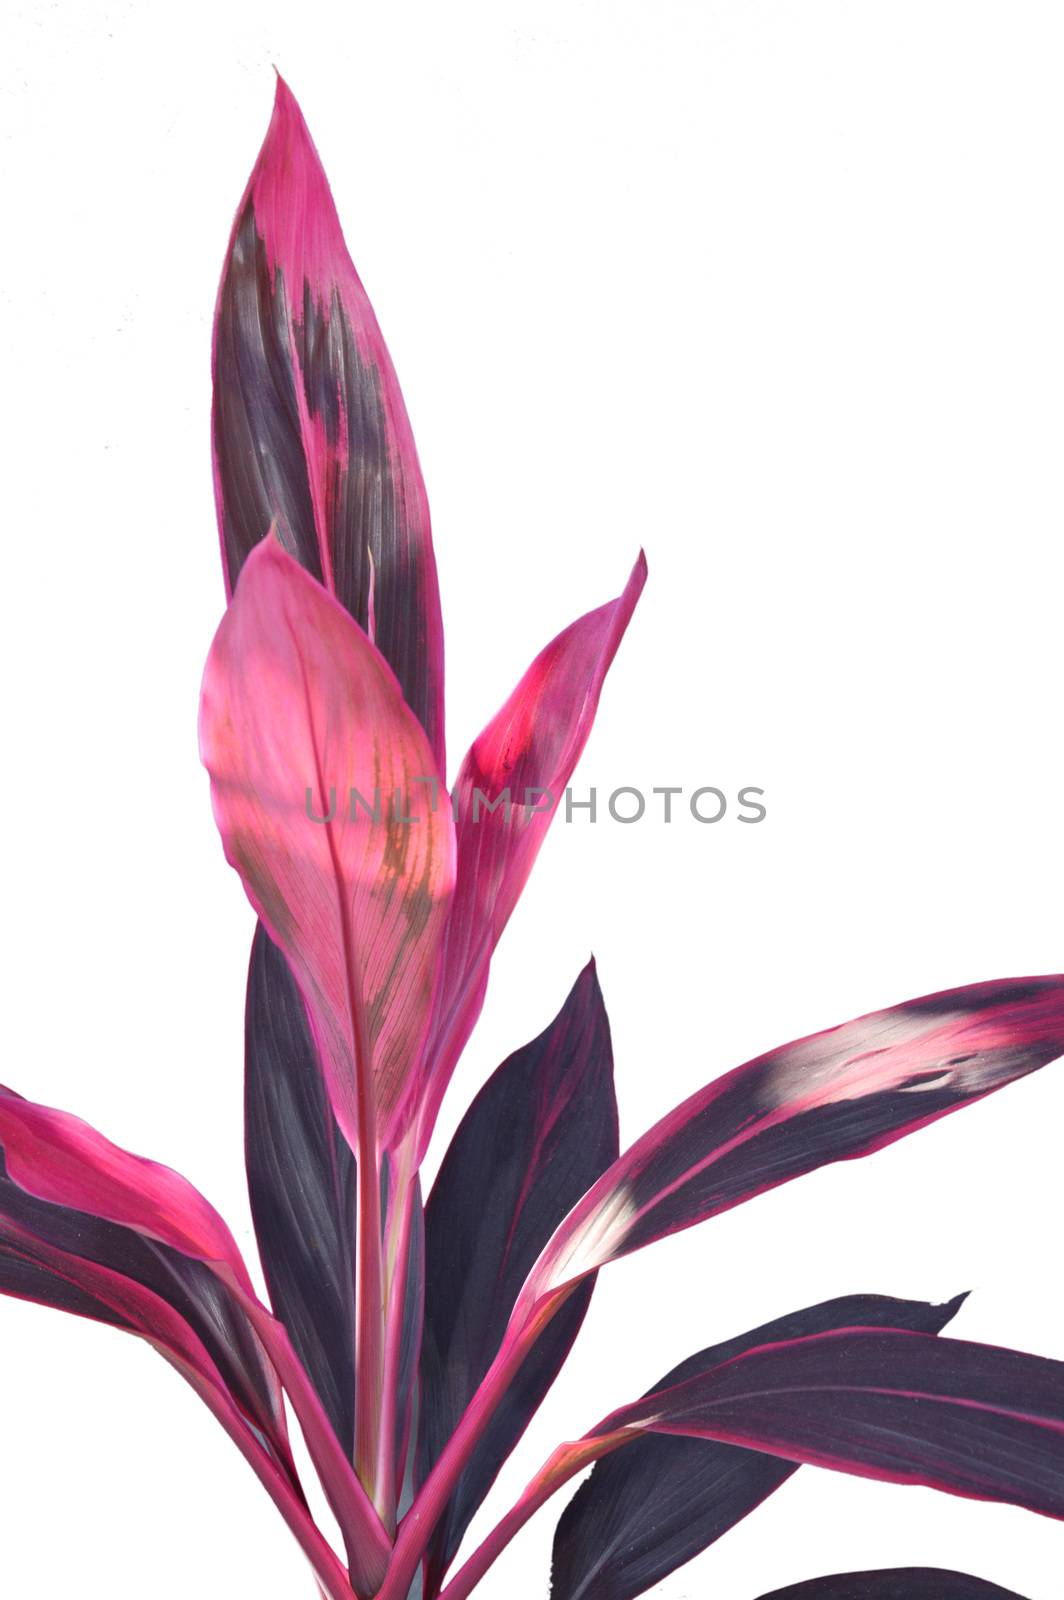 Corn Plant's bright leaf with red stripe (Dracaena fragrans)